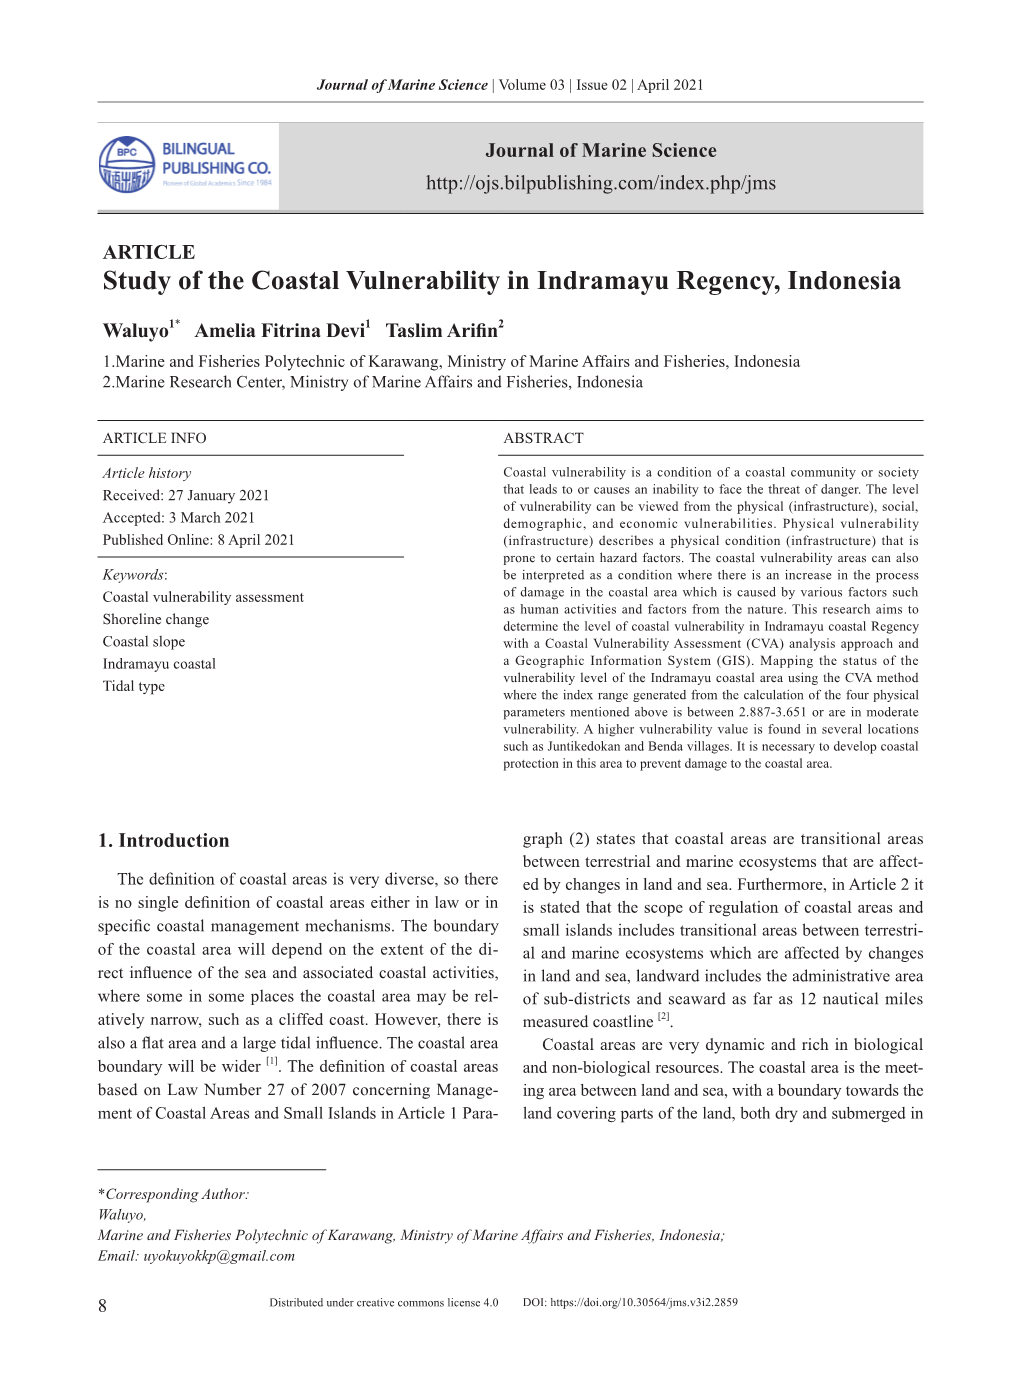 Study of the Coastal Vulnerability in Indramayu Regency, Indonesia